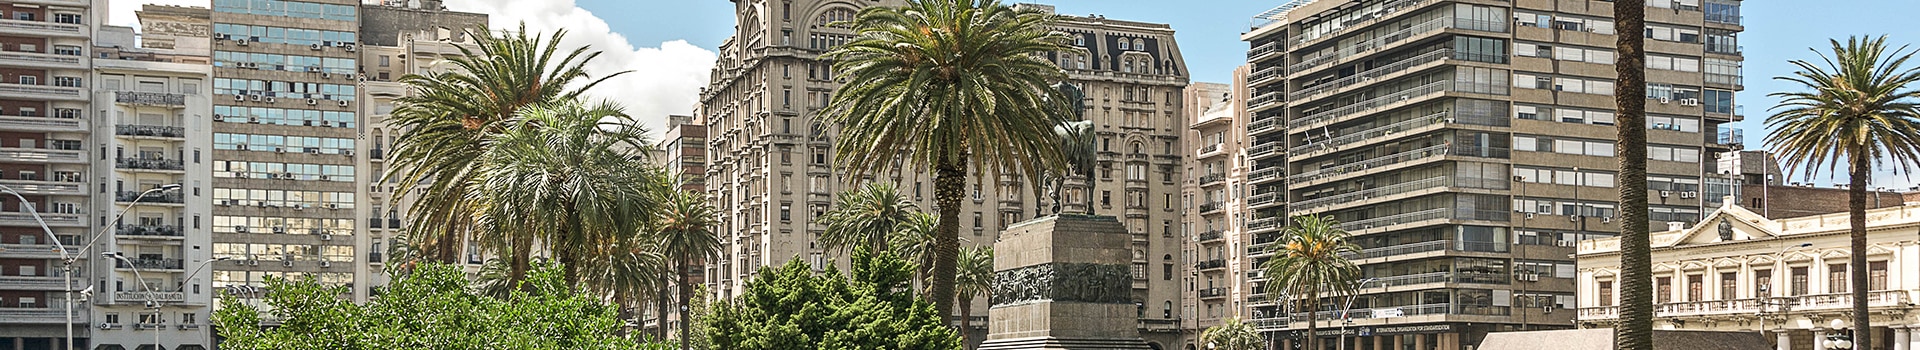 Bilbao - Montevideo